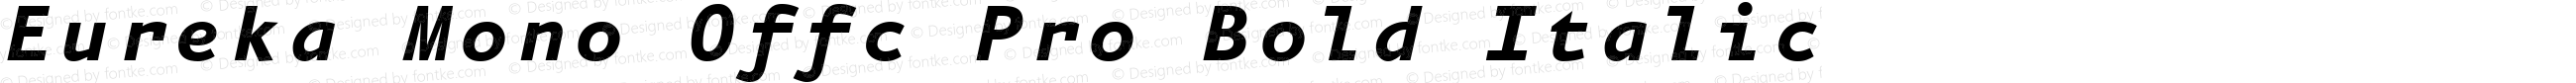 Eureka Mono Offc Pro Bold Italic